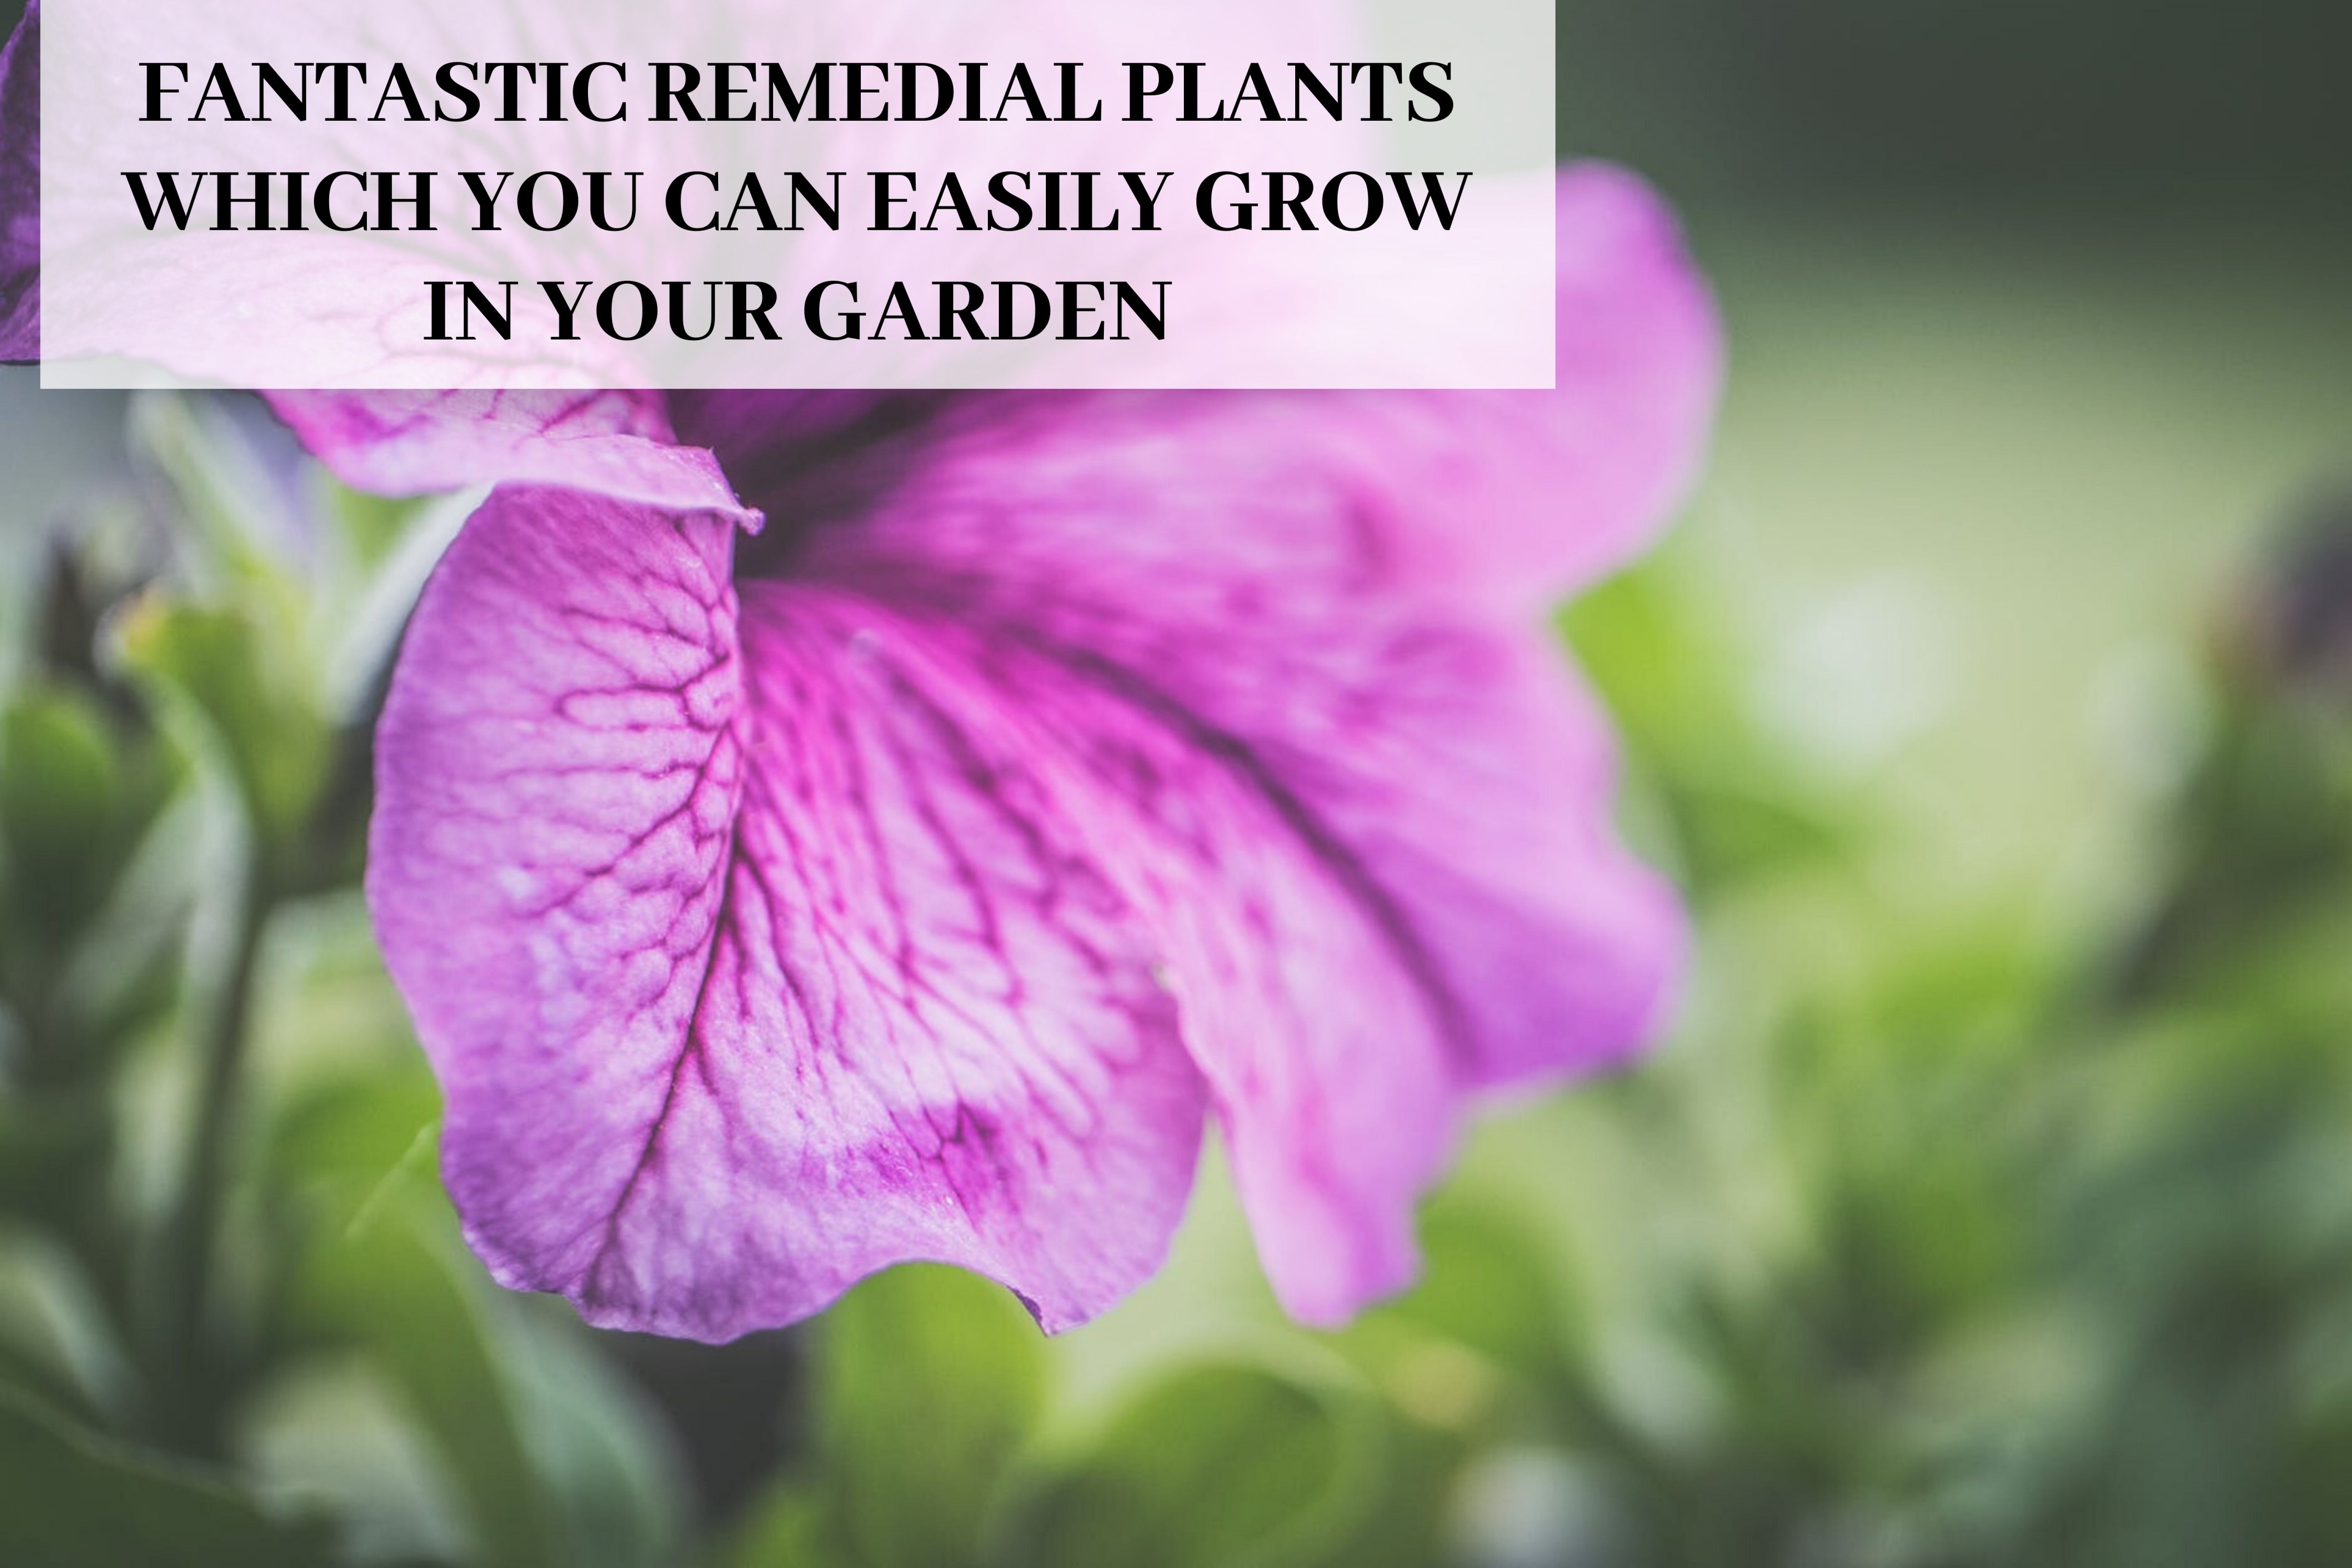 Remedial Plants